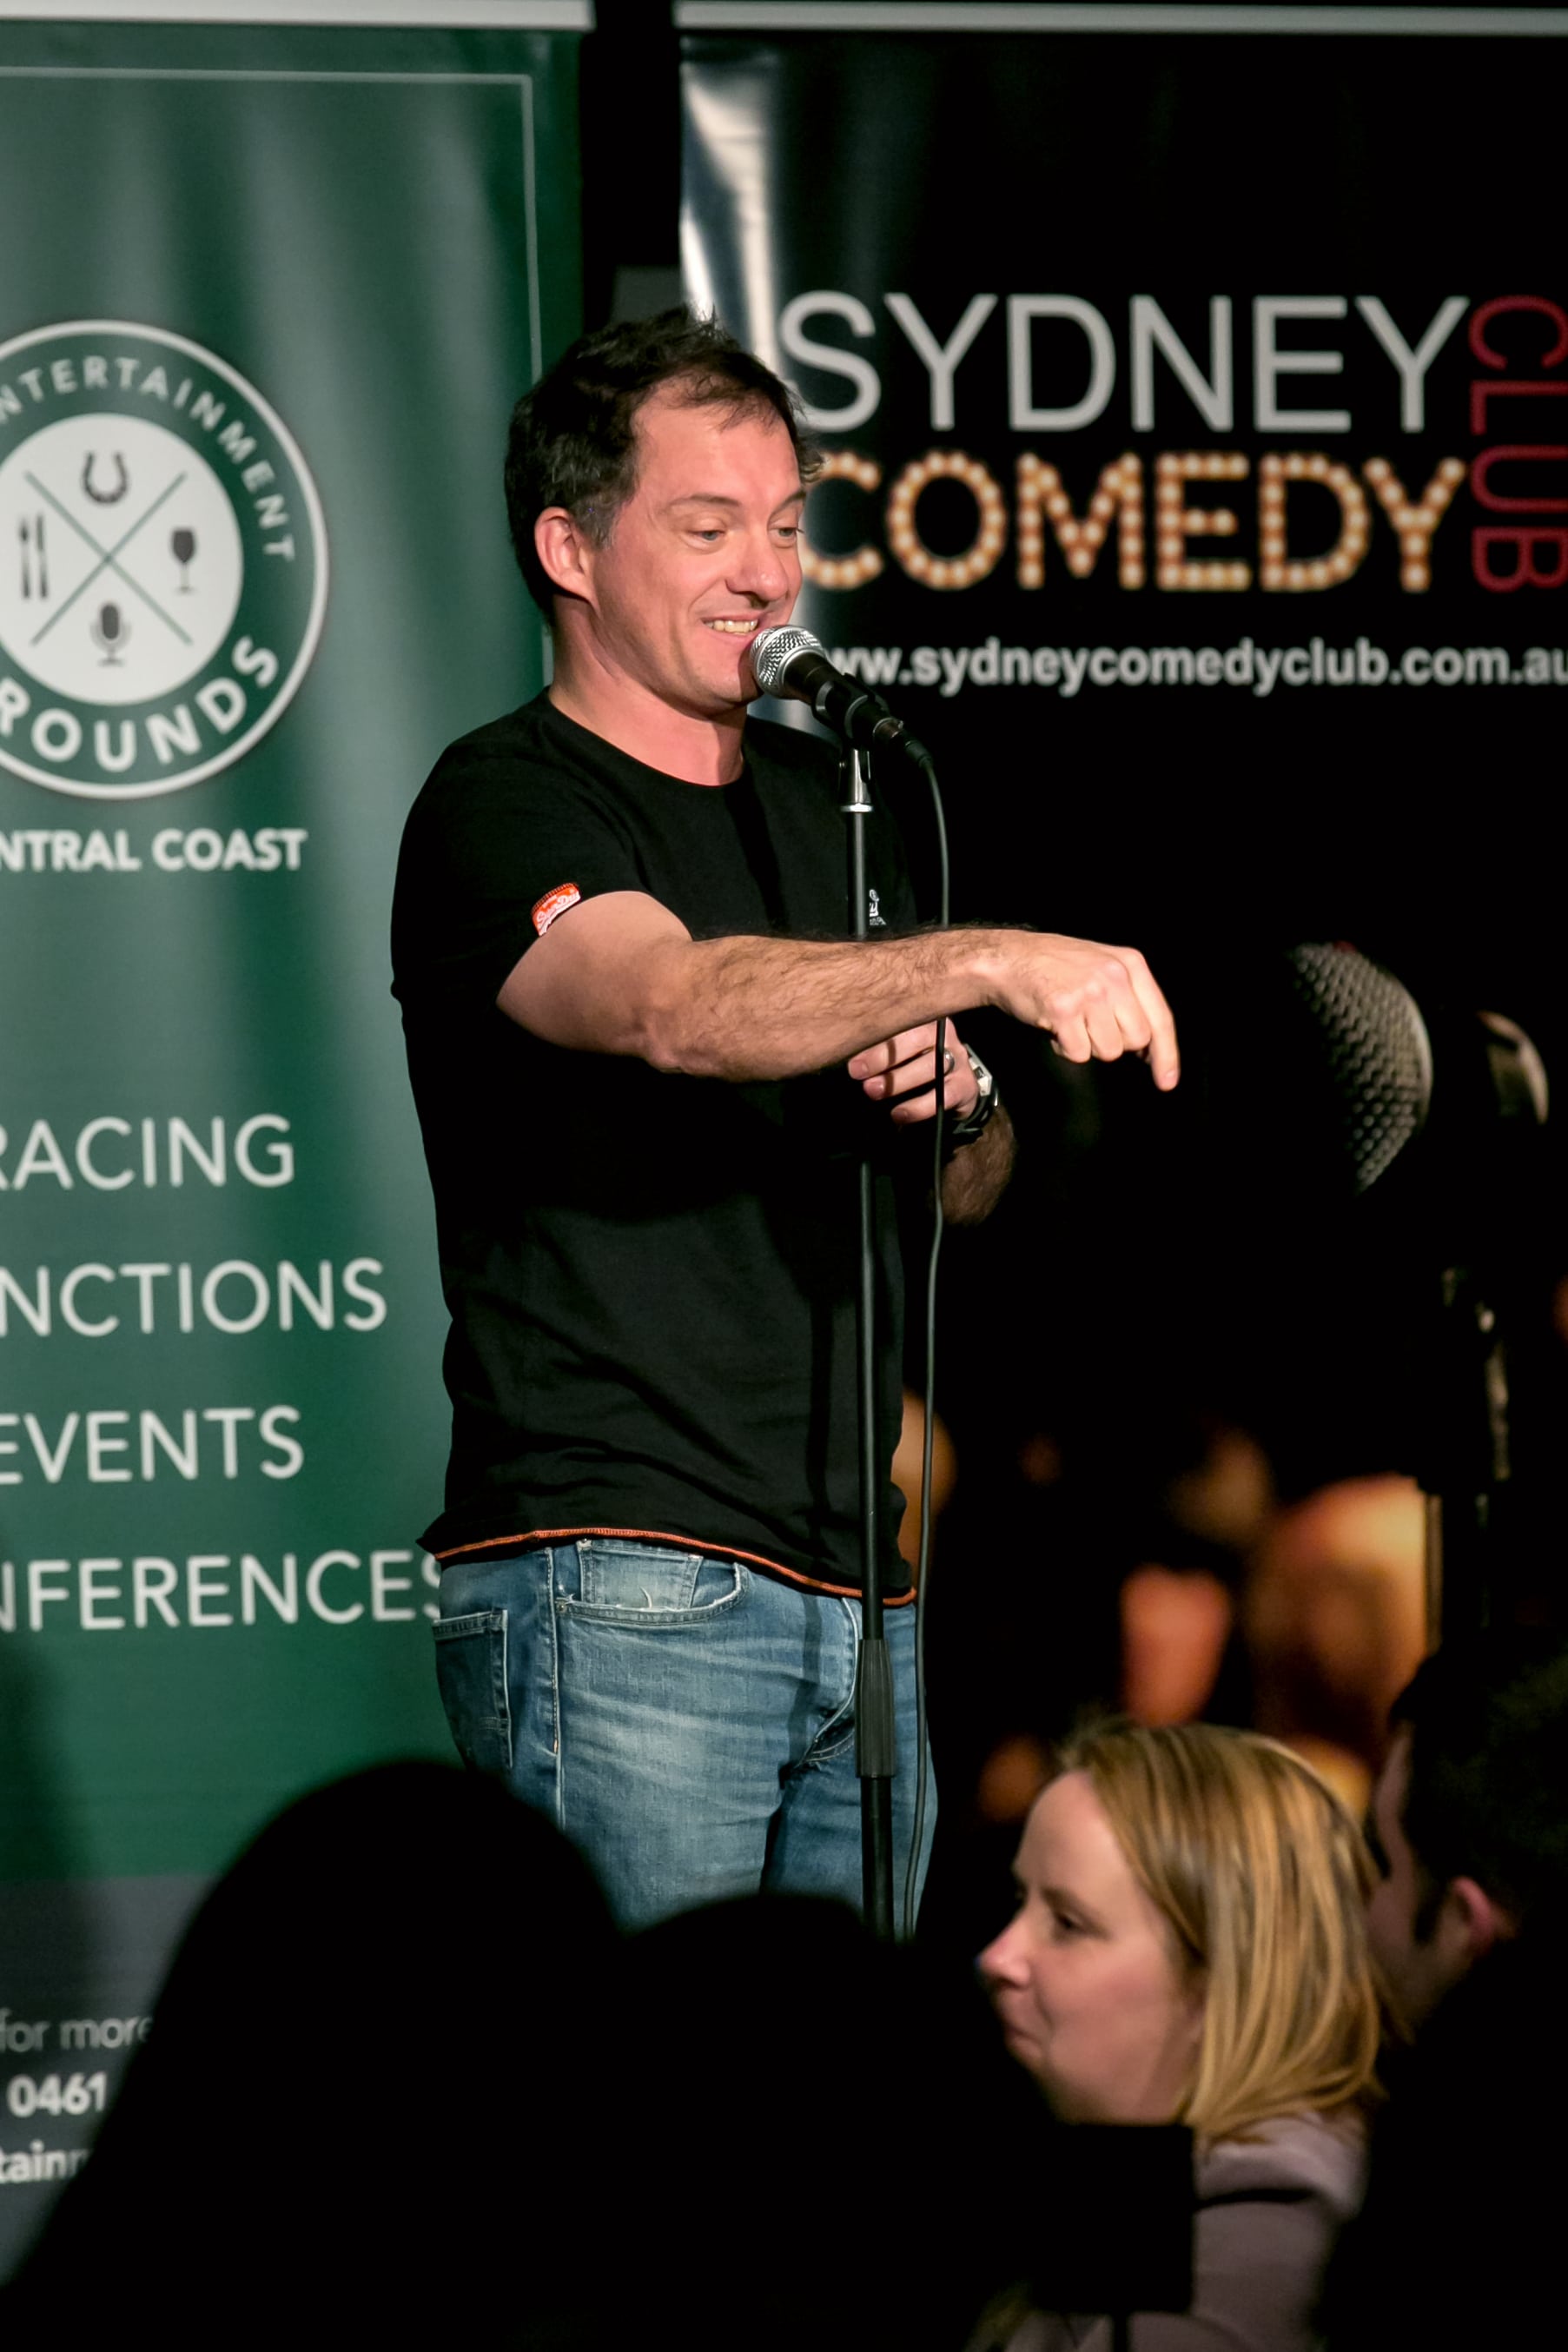 Sydney Comedy Club at The EG - CANCELLED